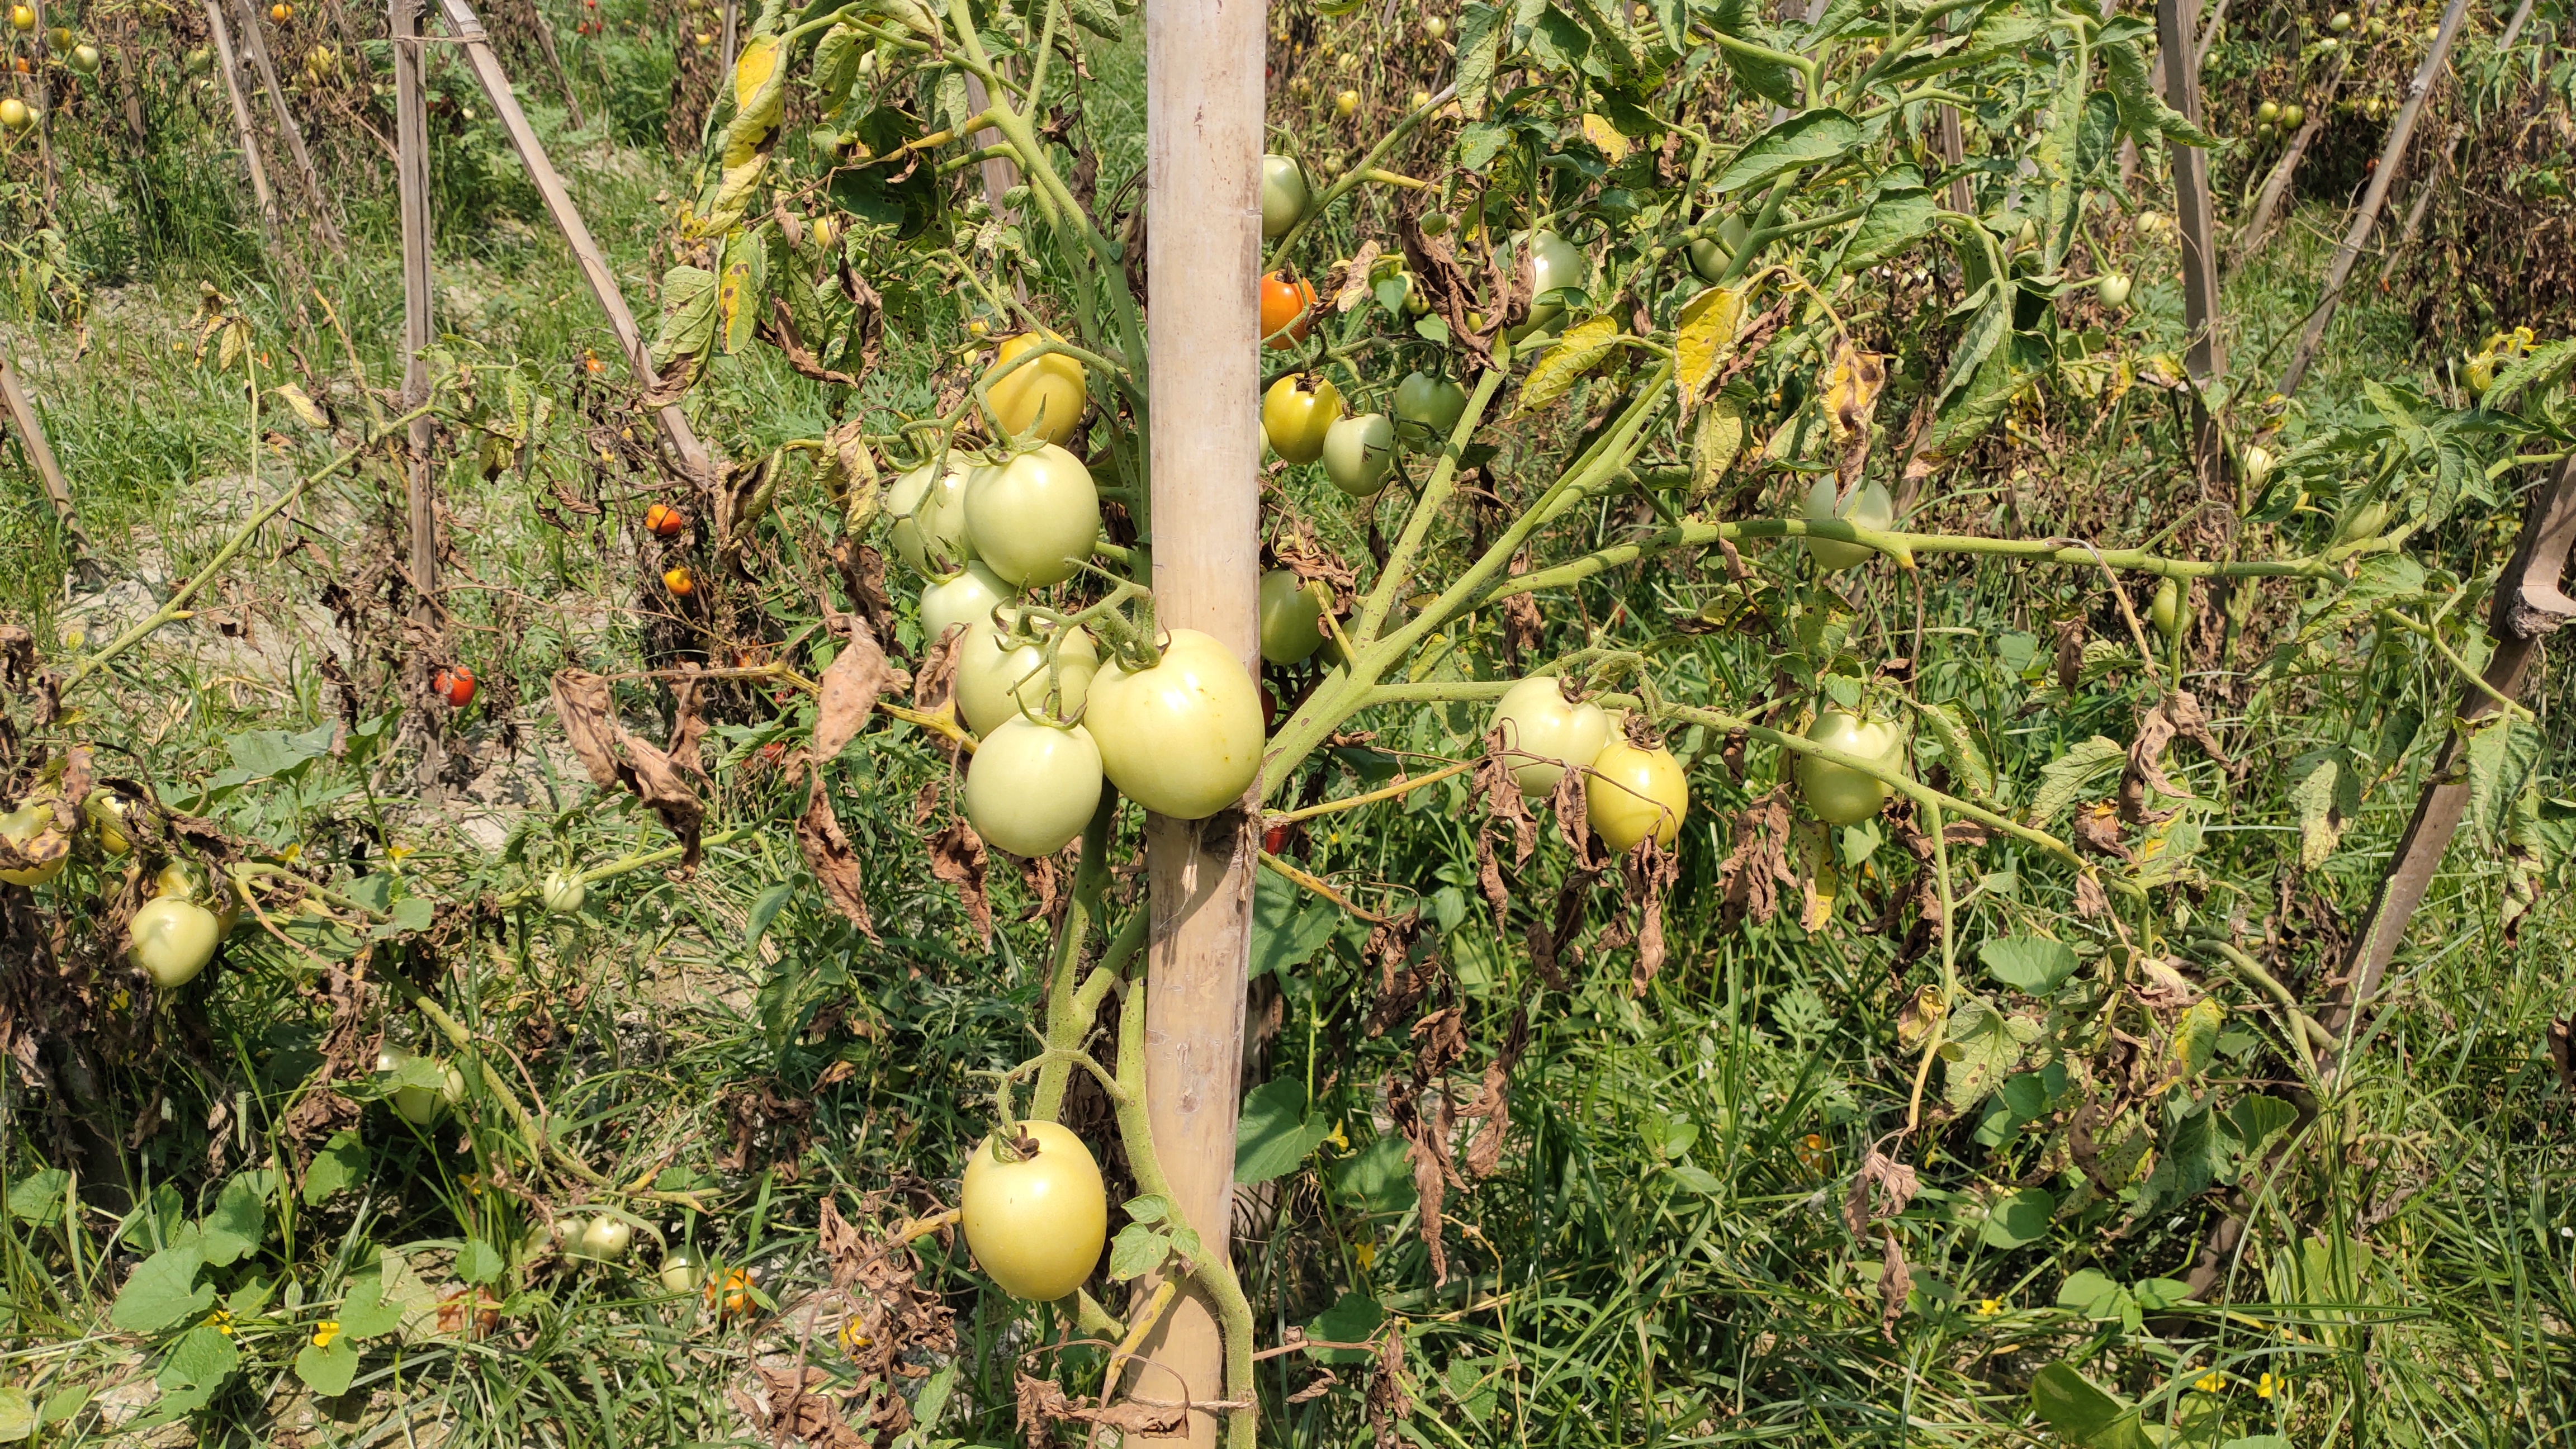 tomato farmers in loss due to lockdown